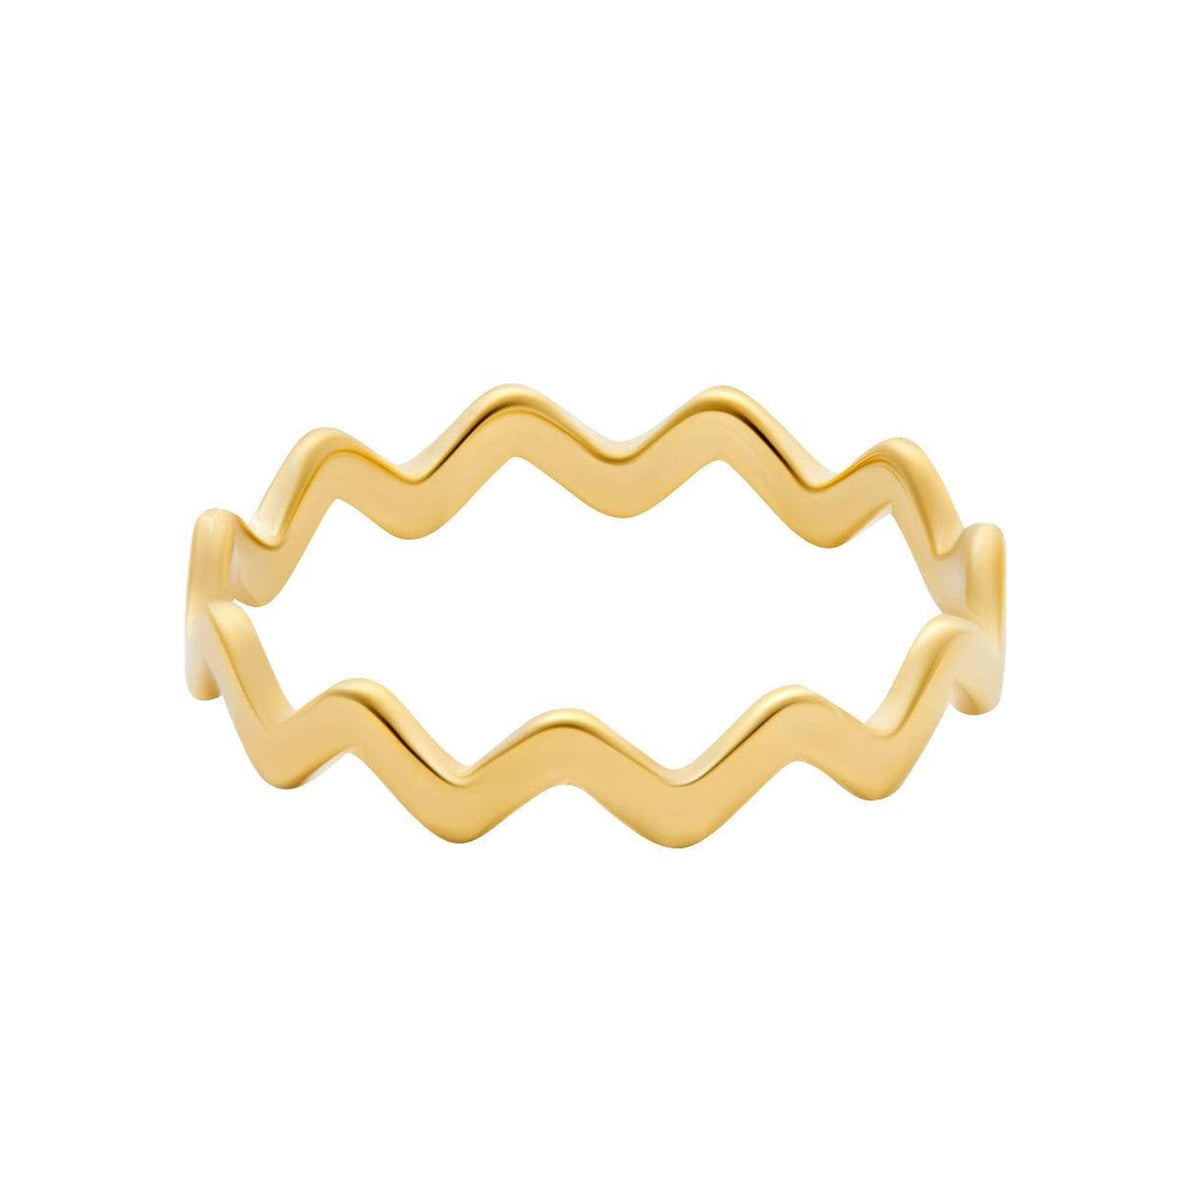 BohoMoon Stainless Steel Libby Ring Gold / US 4 / UK H / EUR 46 / (xxsmall)